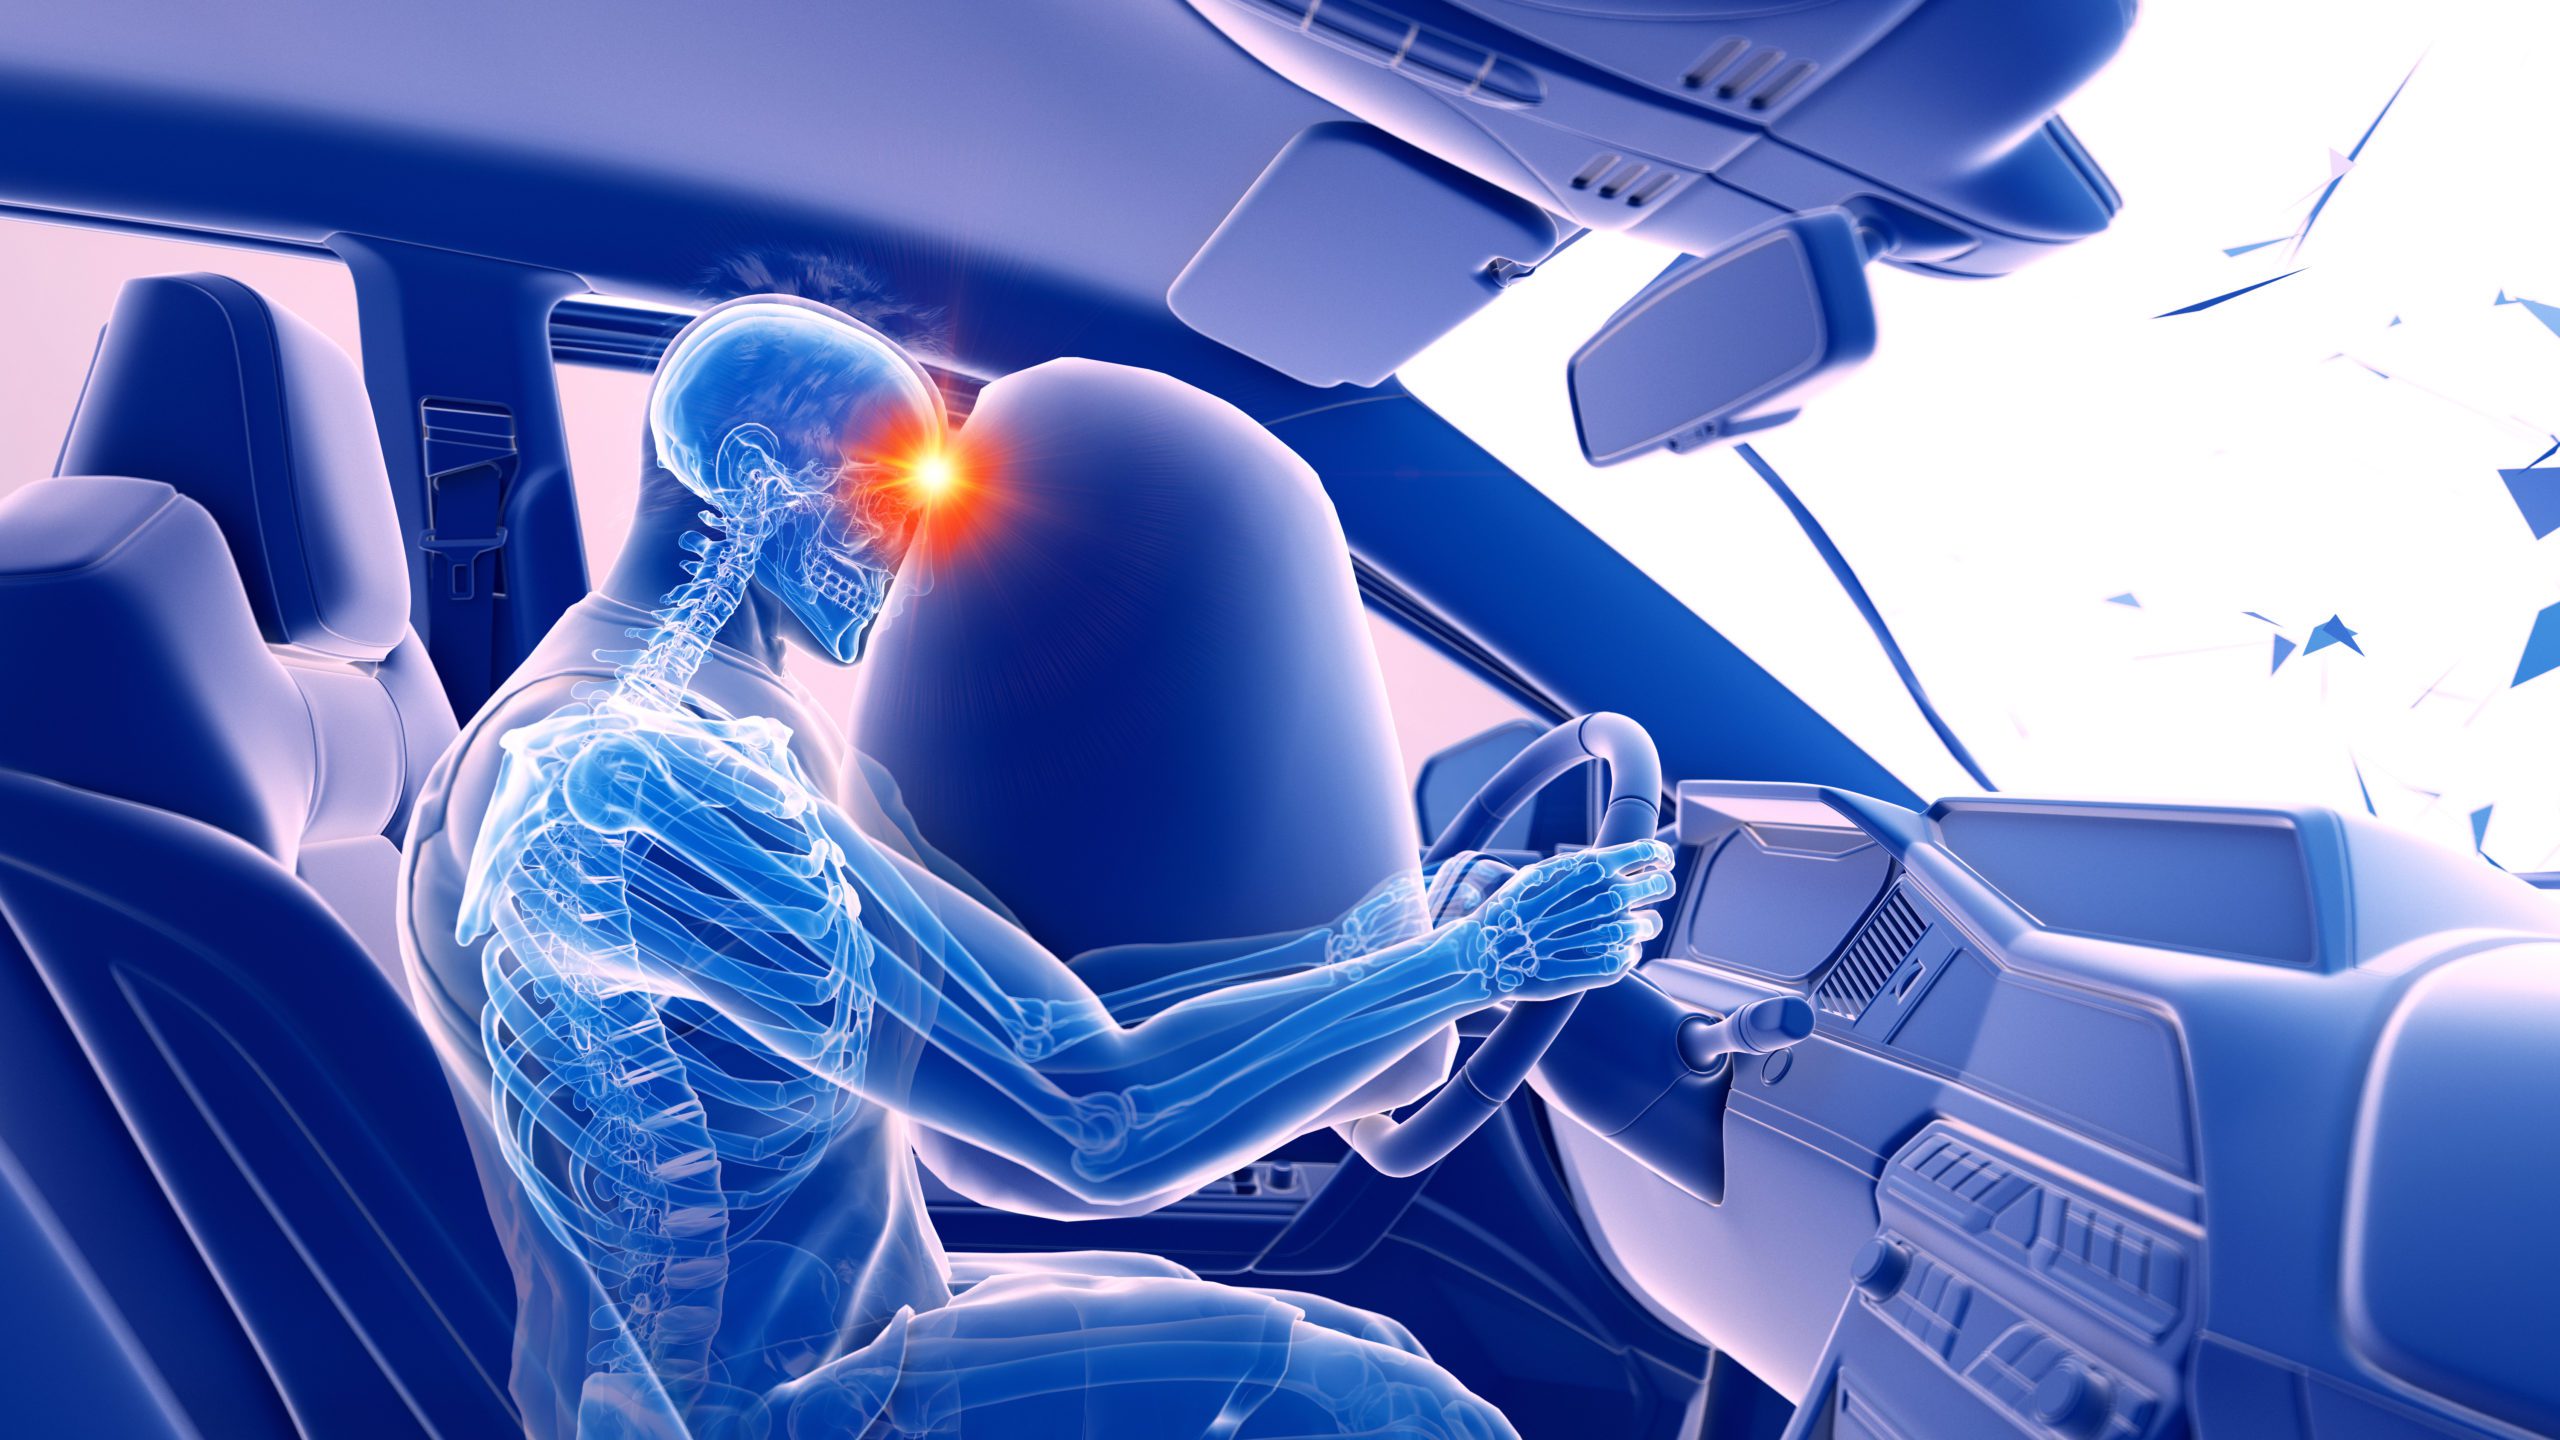 seguridad activa y pasiva airbags